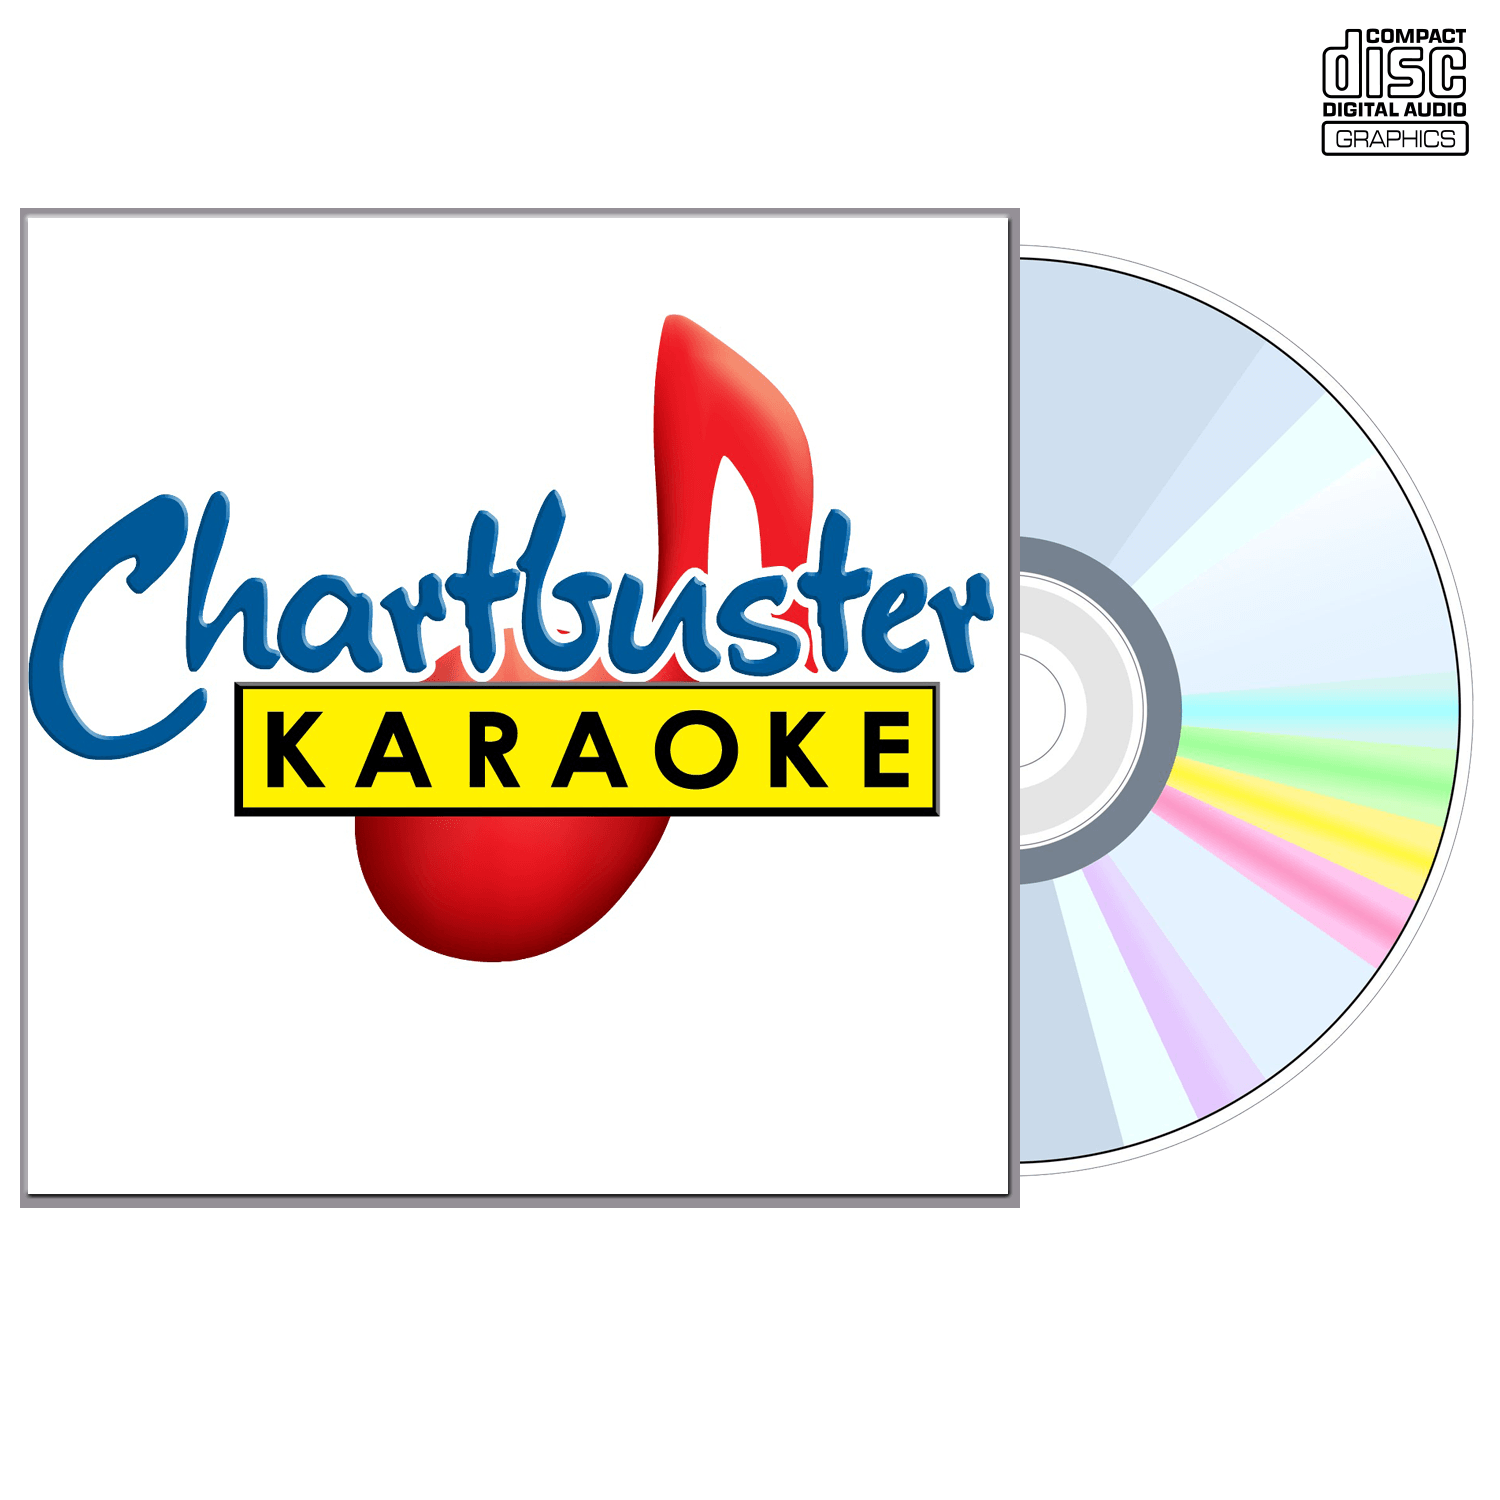 Mary Chapin Carpenter Vol 2 - CD+G - Chartbuster Karaoke - Karaoke Home Entertainment